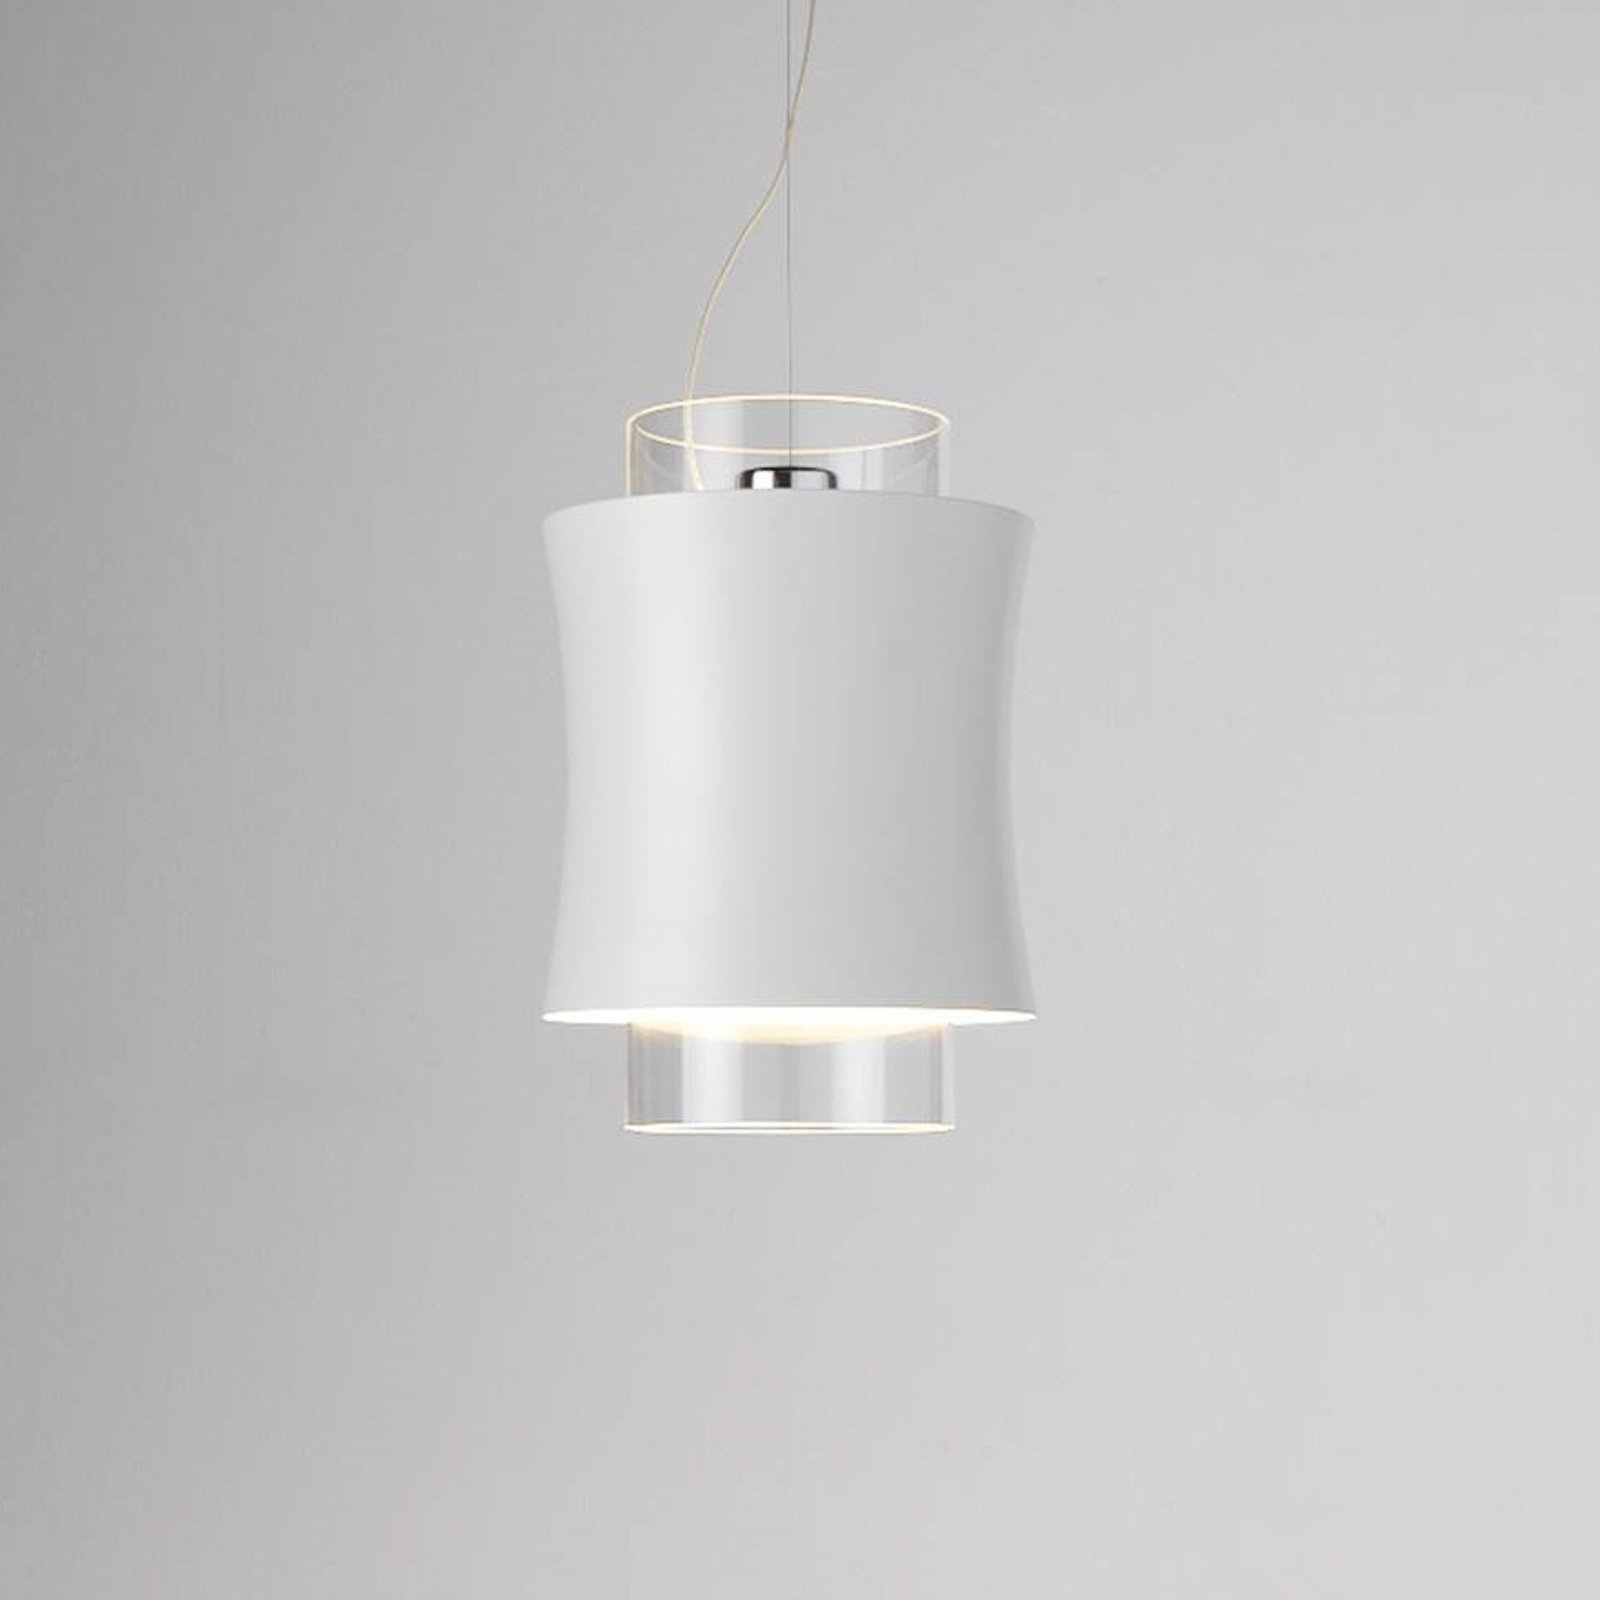 Prandina Fez S1 lampa wisząca biała matowa